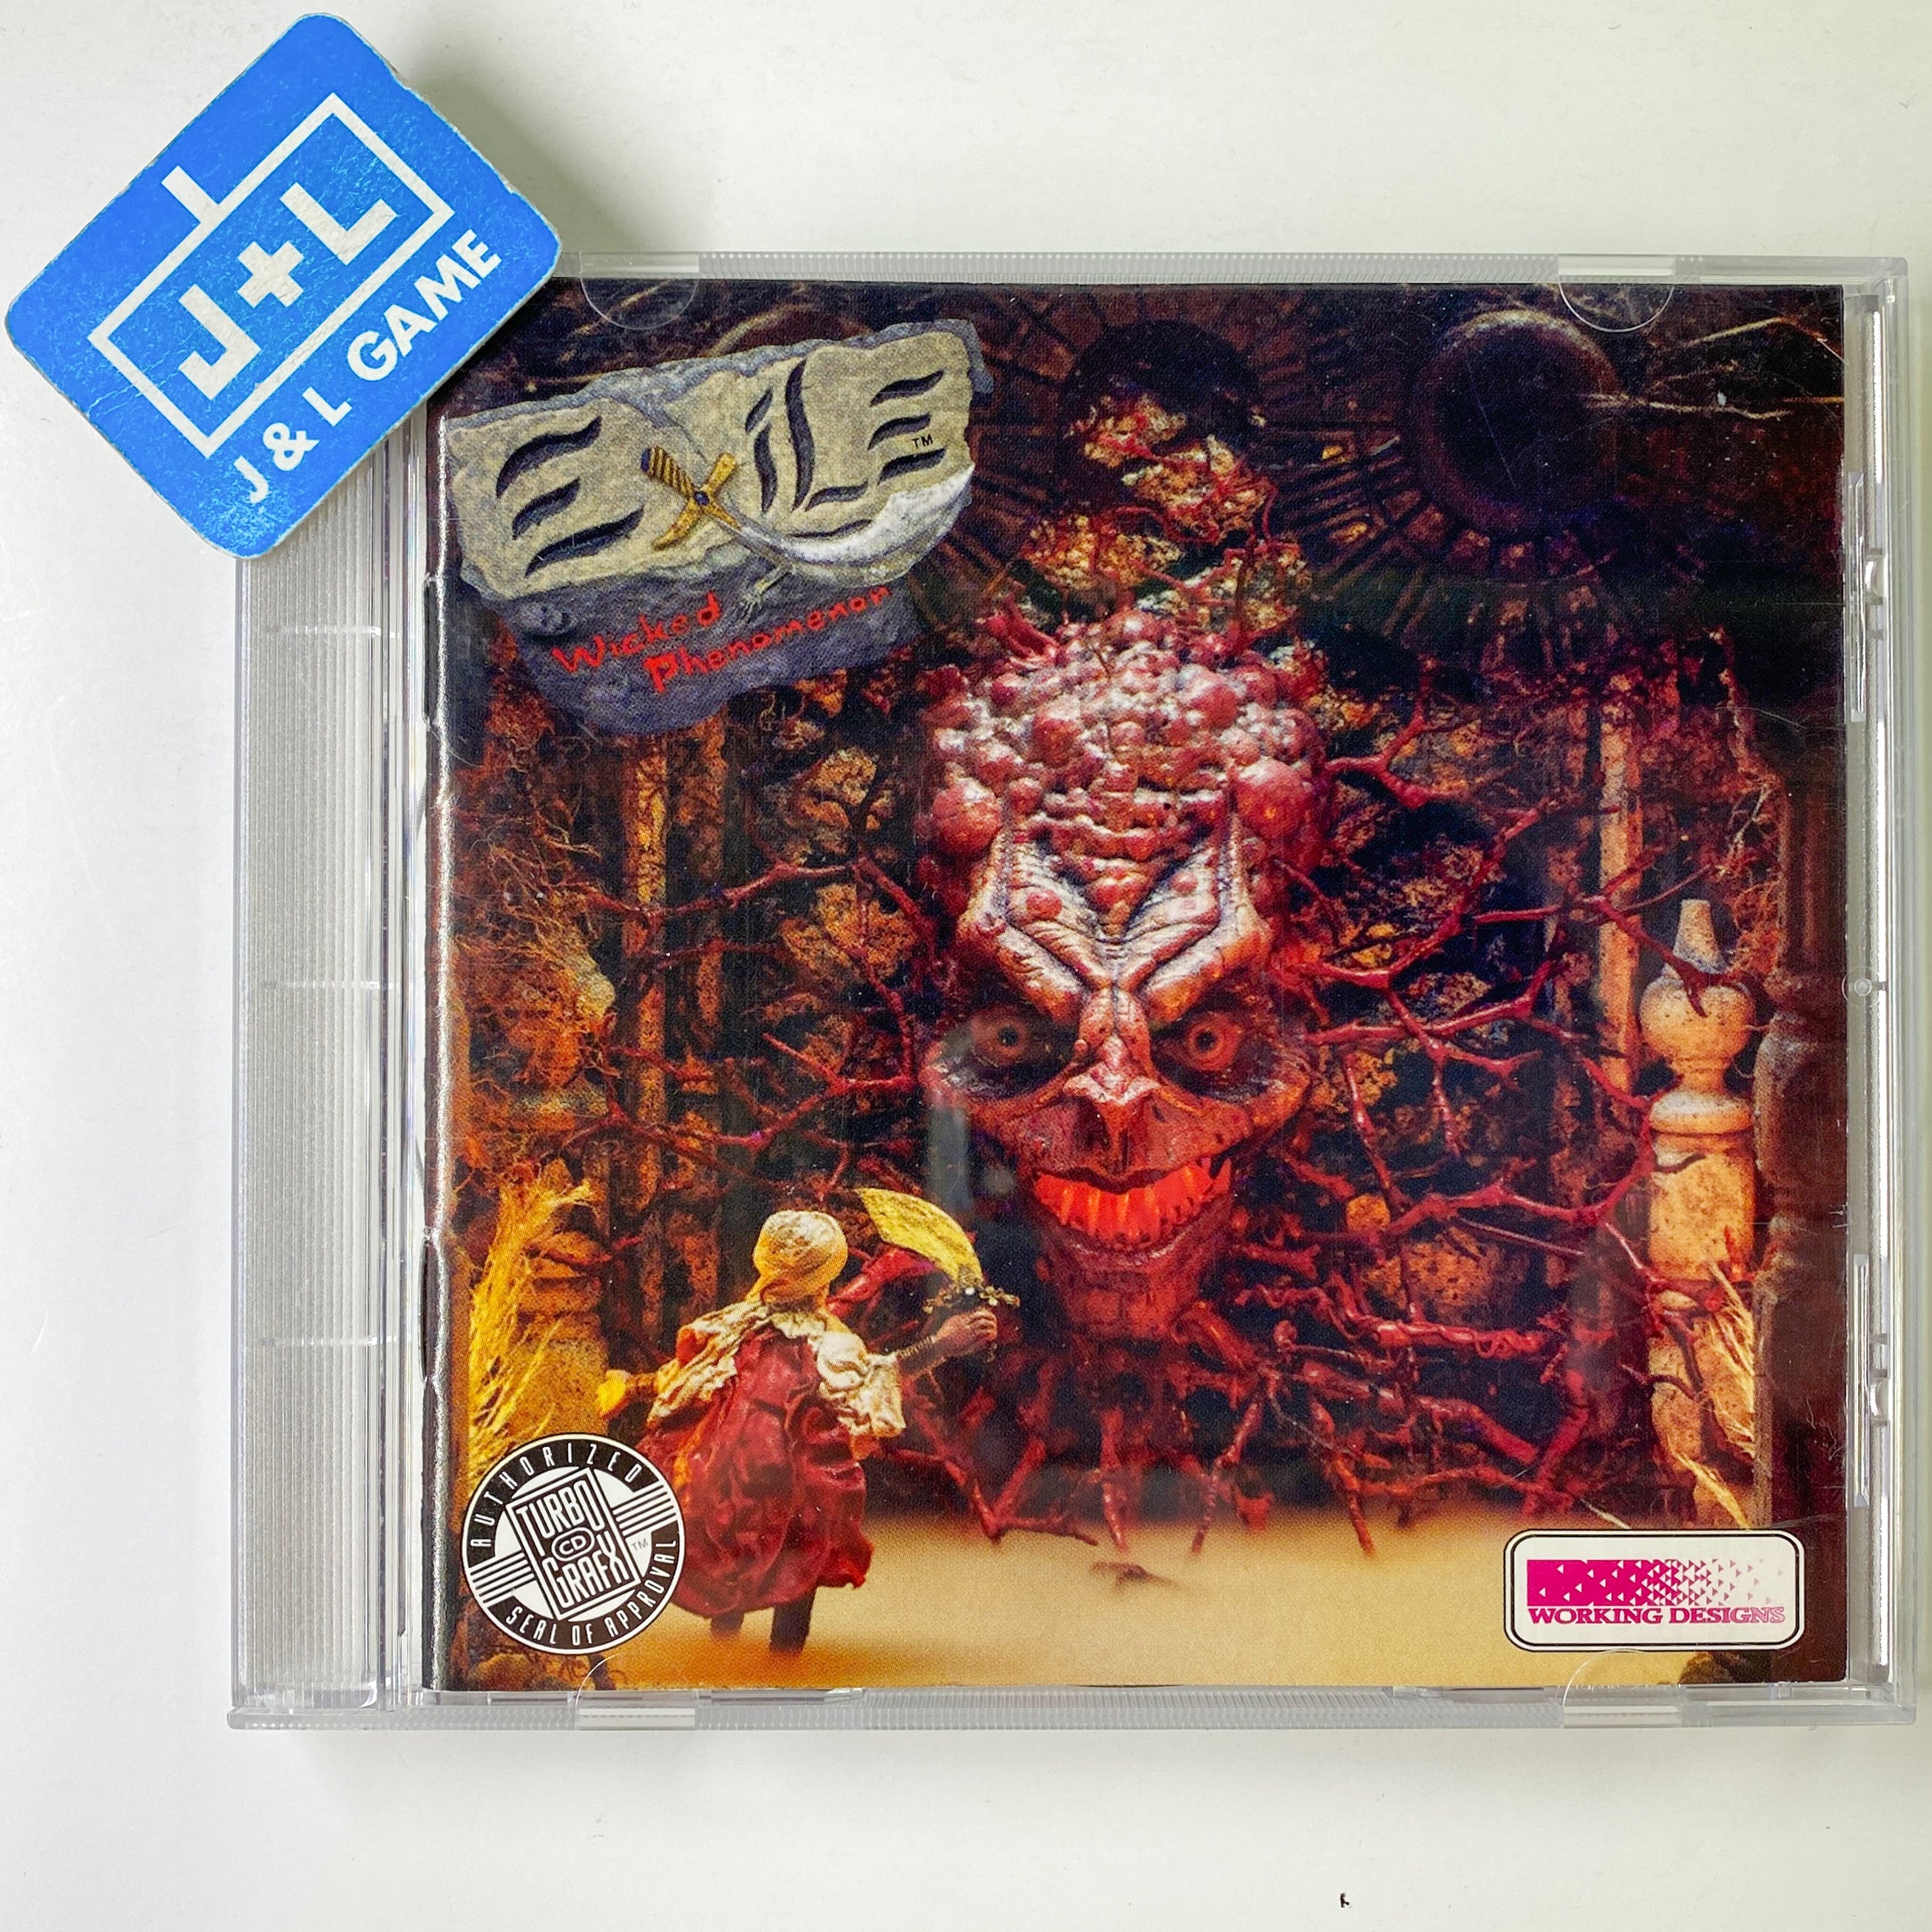 Exile: Wicked Phenomenon - Turbo CD [Pre-Owned]